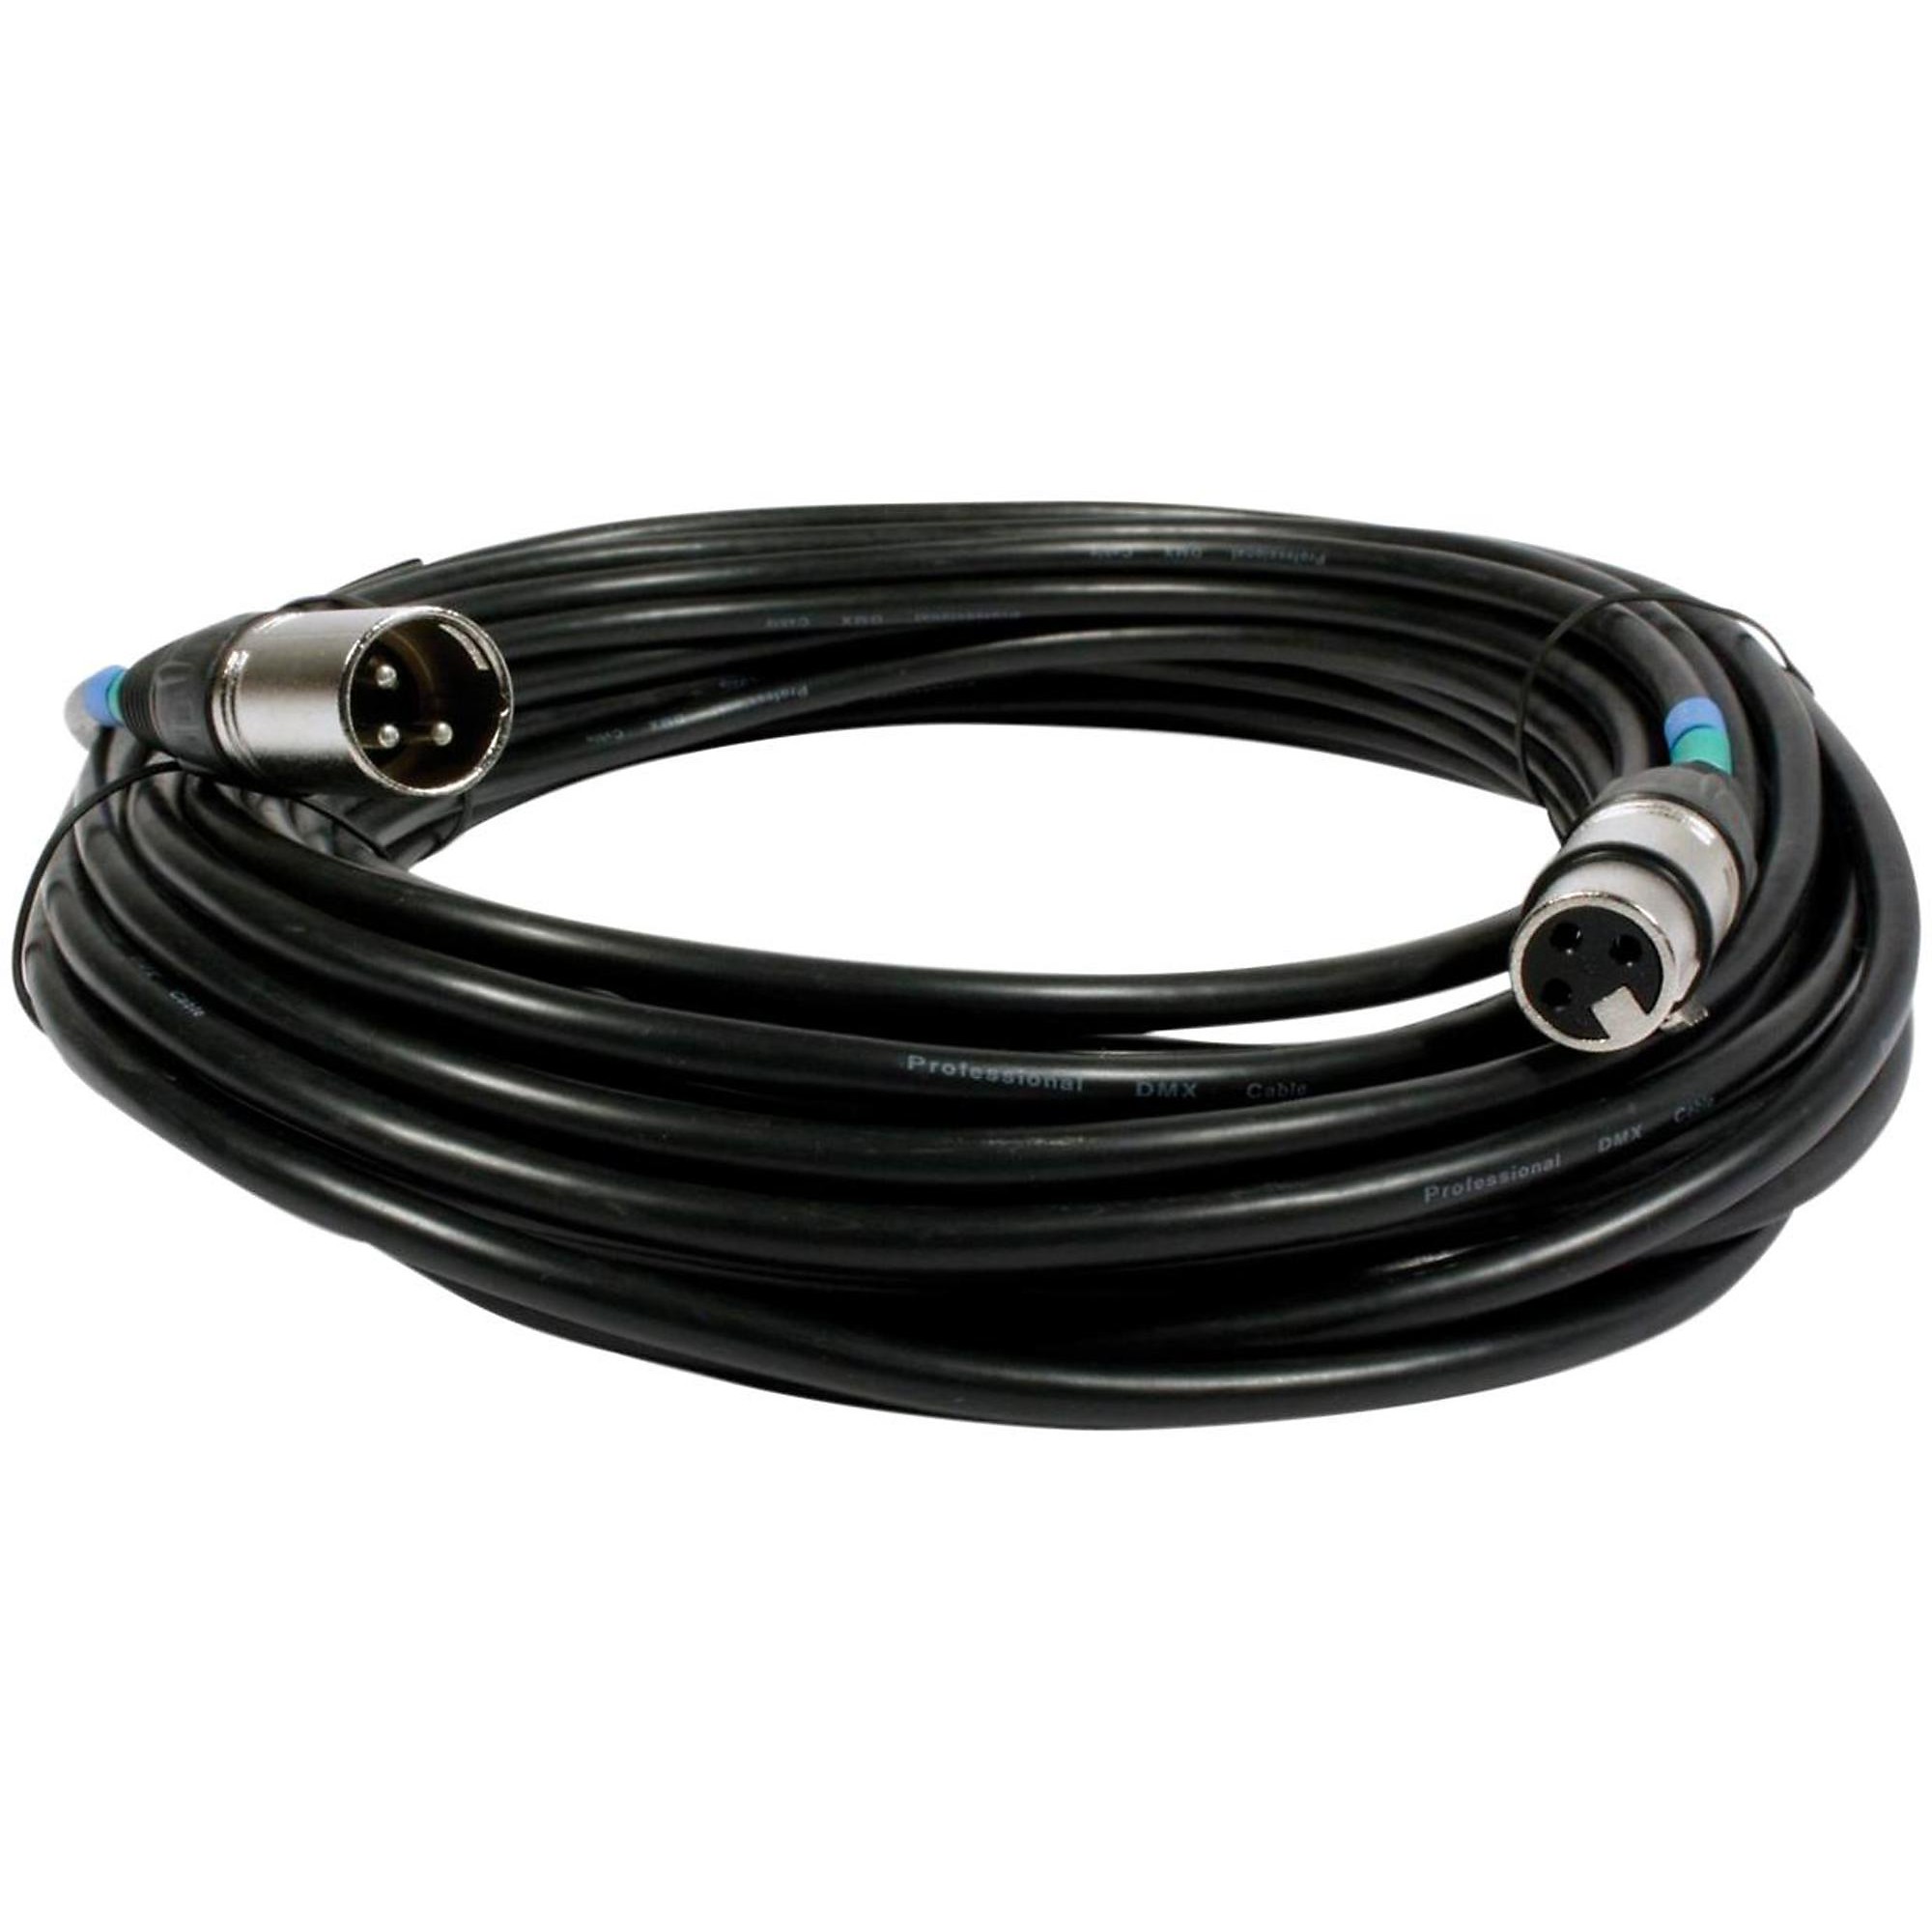 Livewire Advantage DMX Serial Data Lighting Cable 25 ft Black